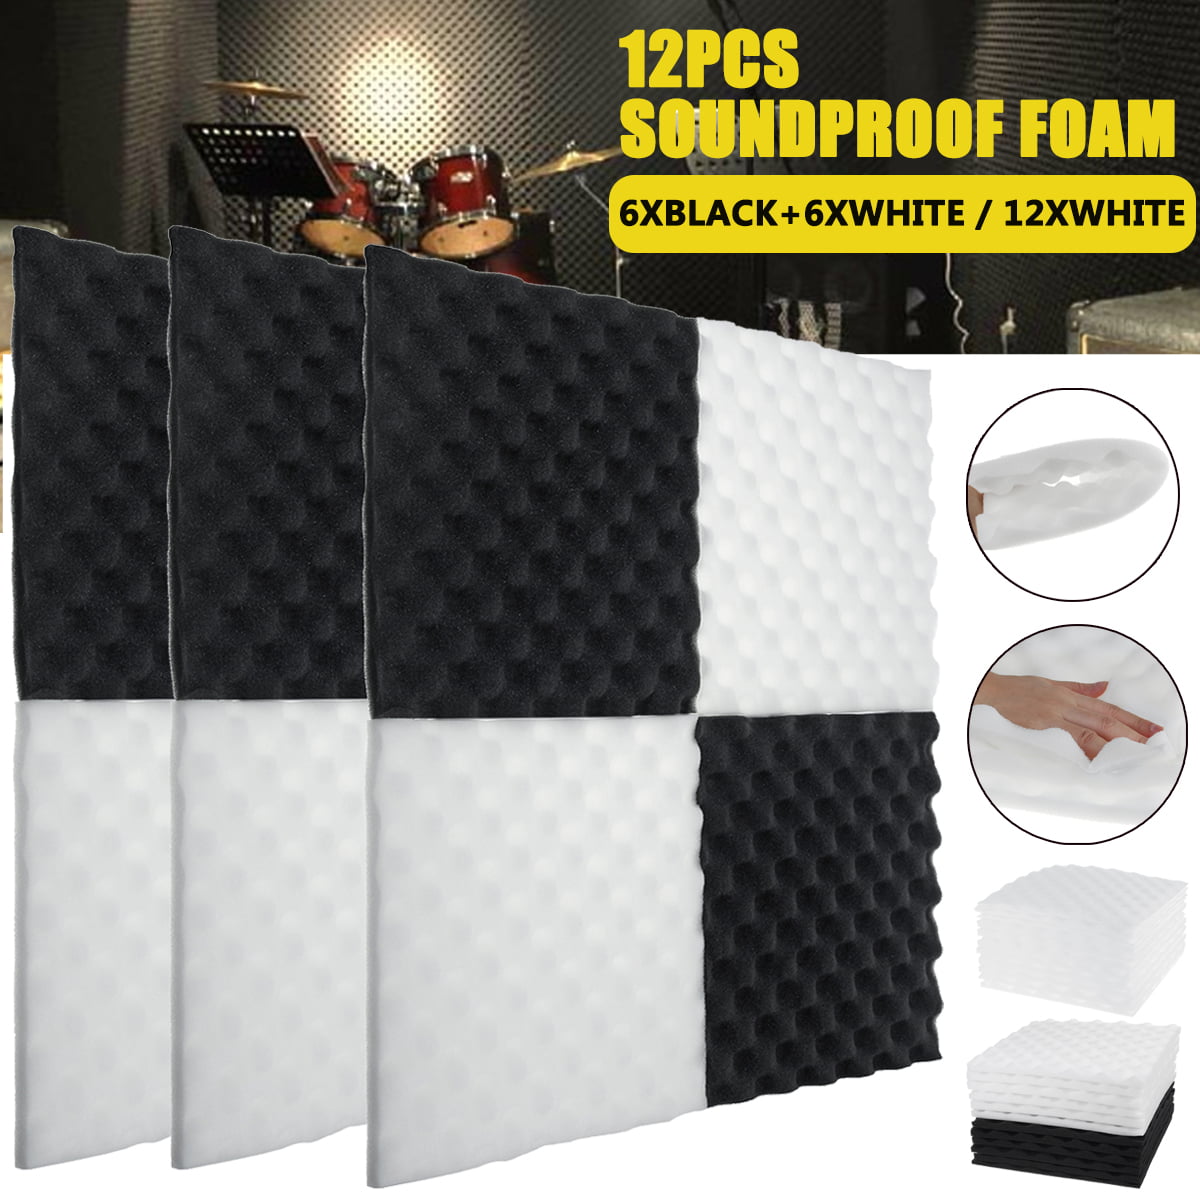 WHITE Sound proof foam panels,24 PCS 2 x 12 x 12 Sound proof foam made of 100% pure sponge,Acoustic foam panels 